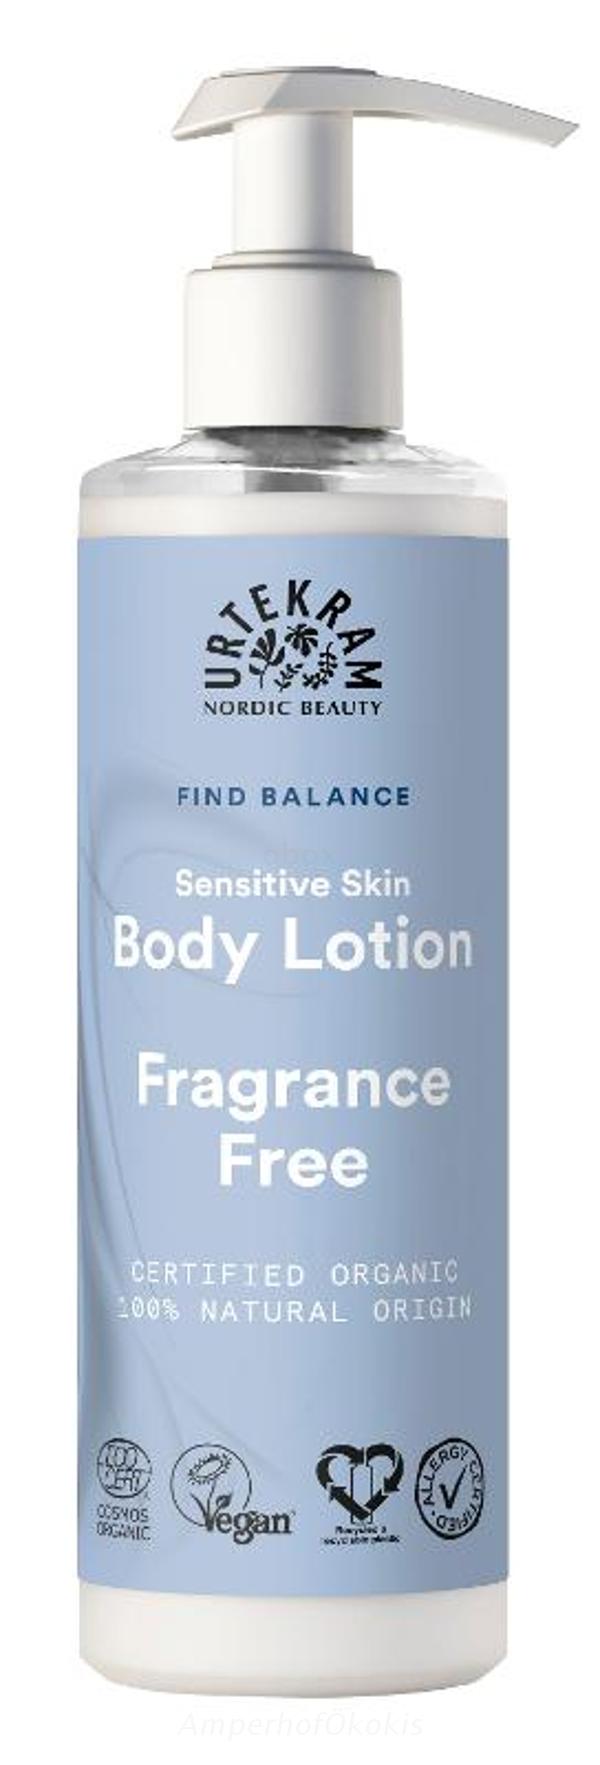 Produktfoto zu Body Lotion Fragrance Free 245 ml